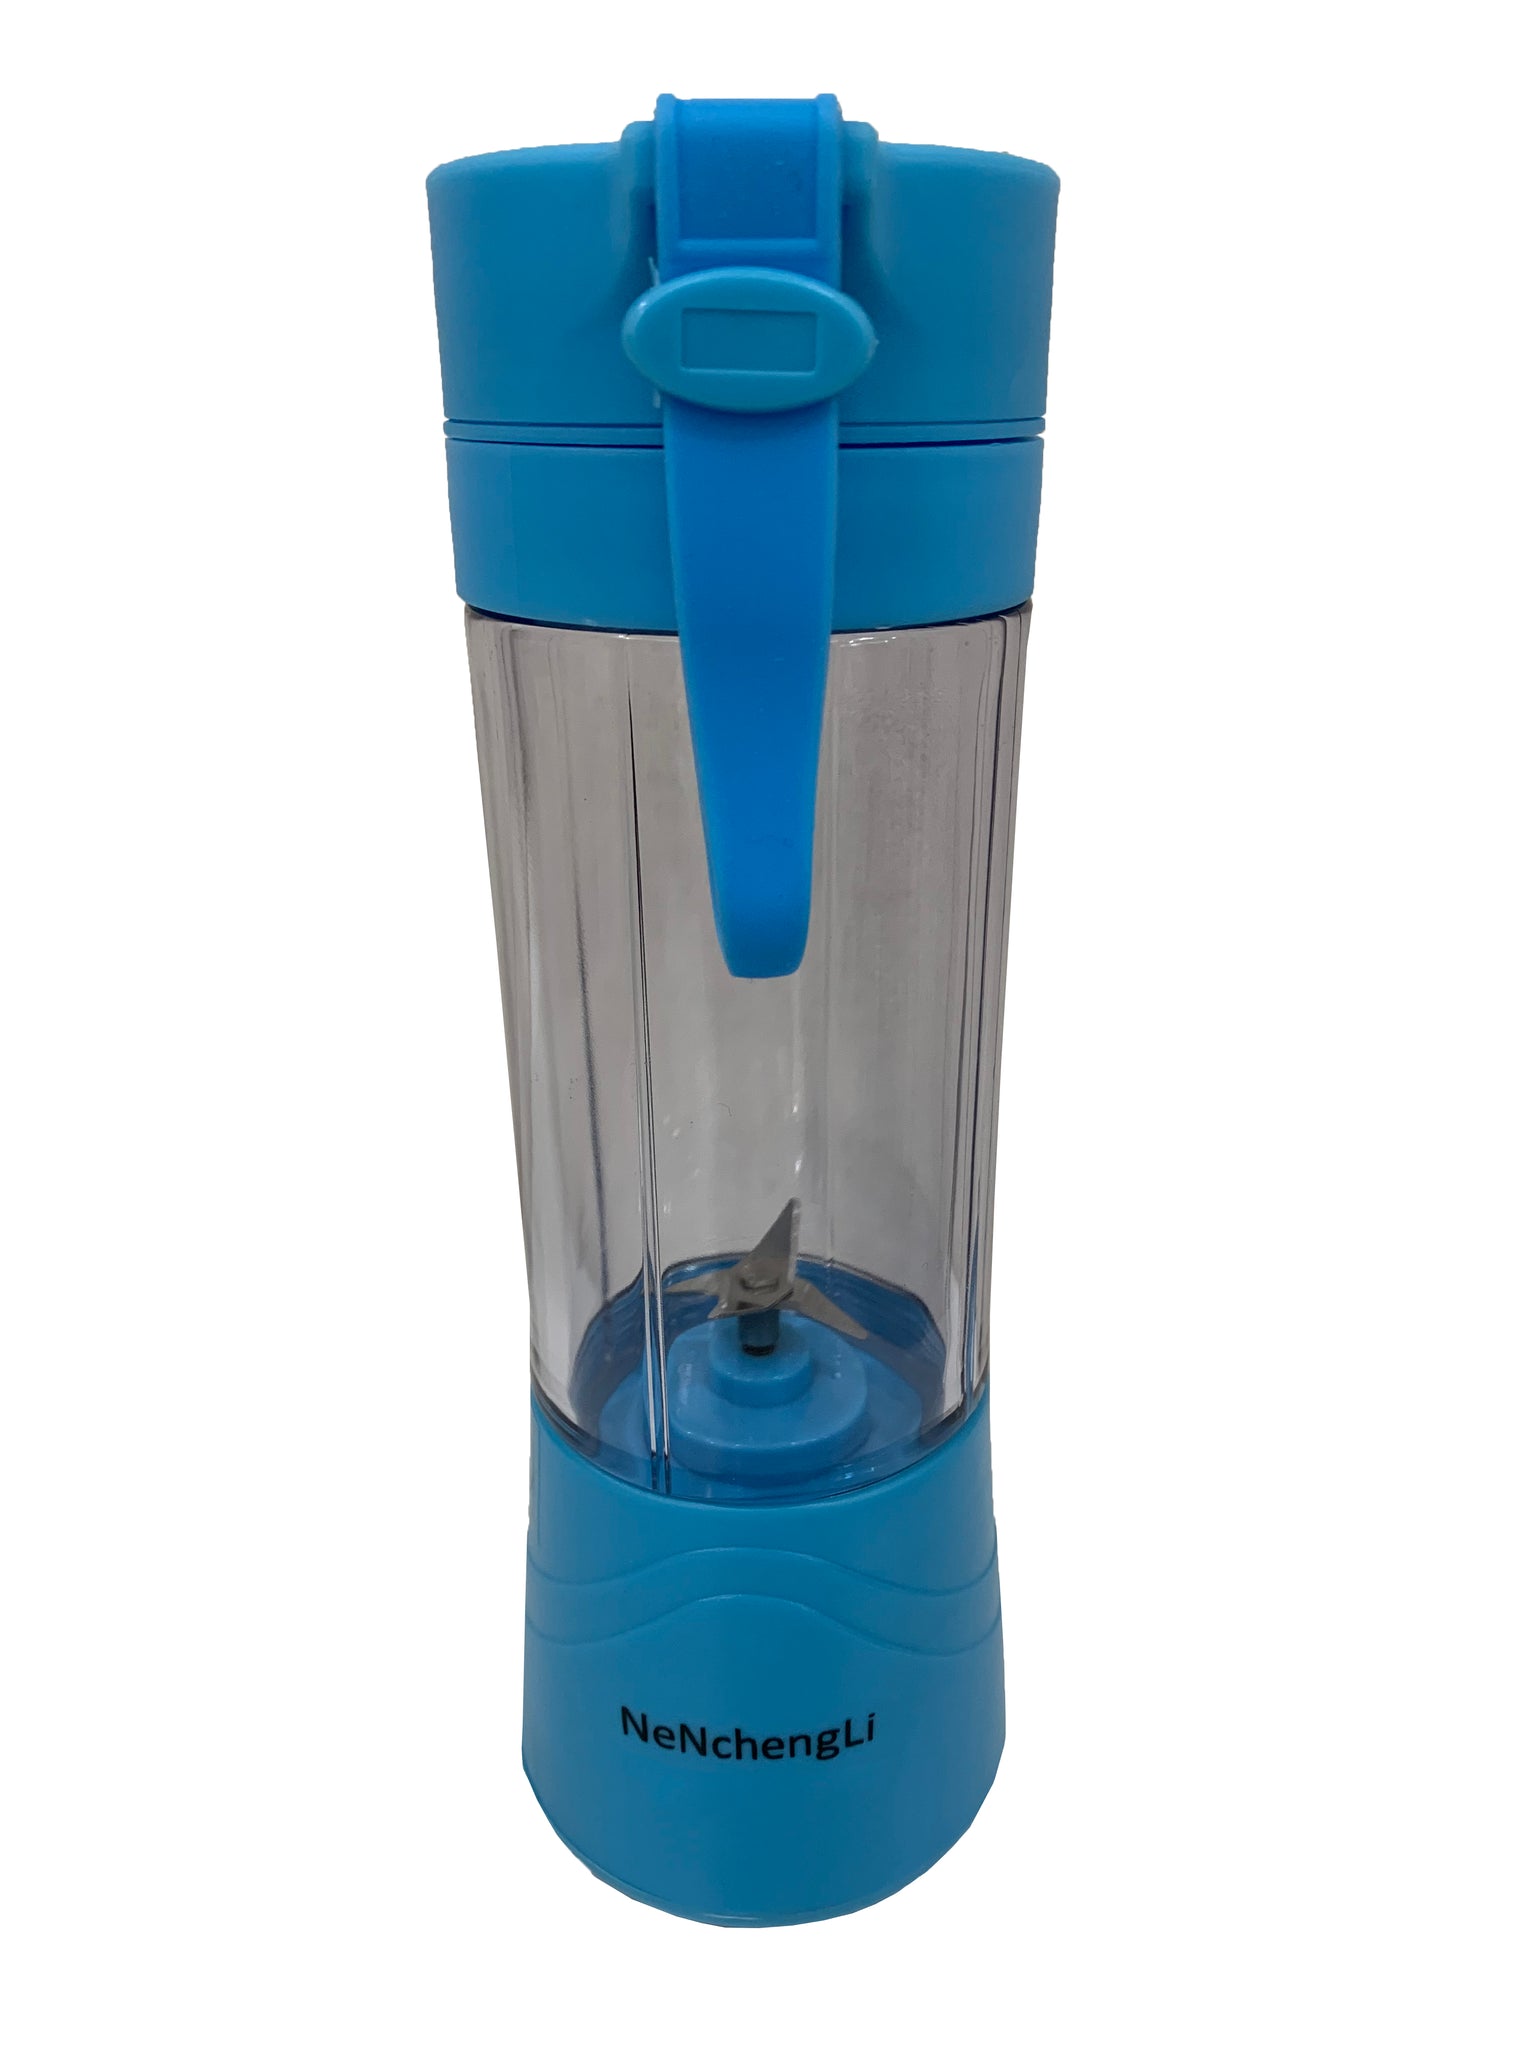 Personal Smoothie Blender Mini Portable Travel Juicer Cup, USB Rechargeable  Blender, Blue